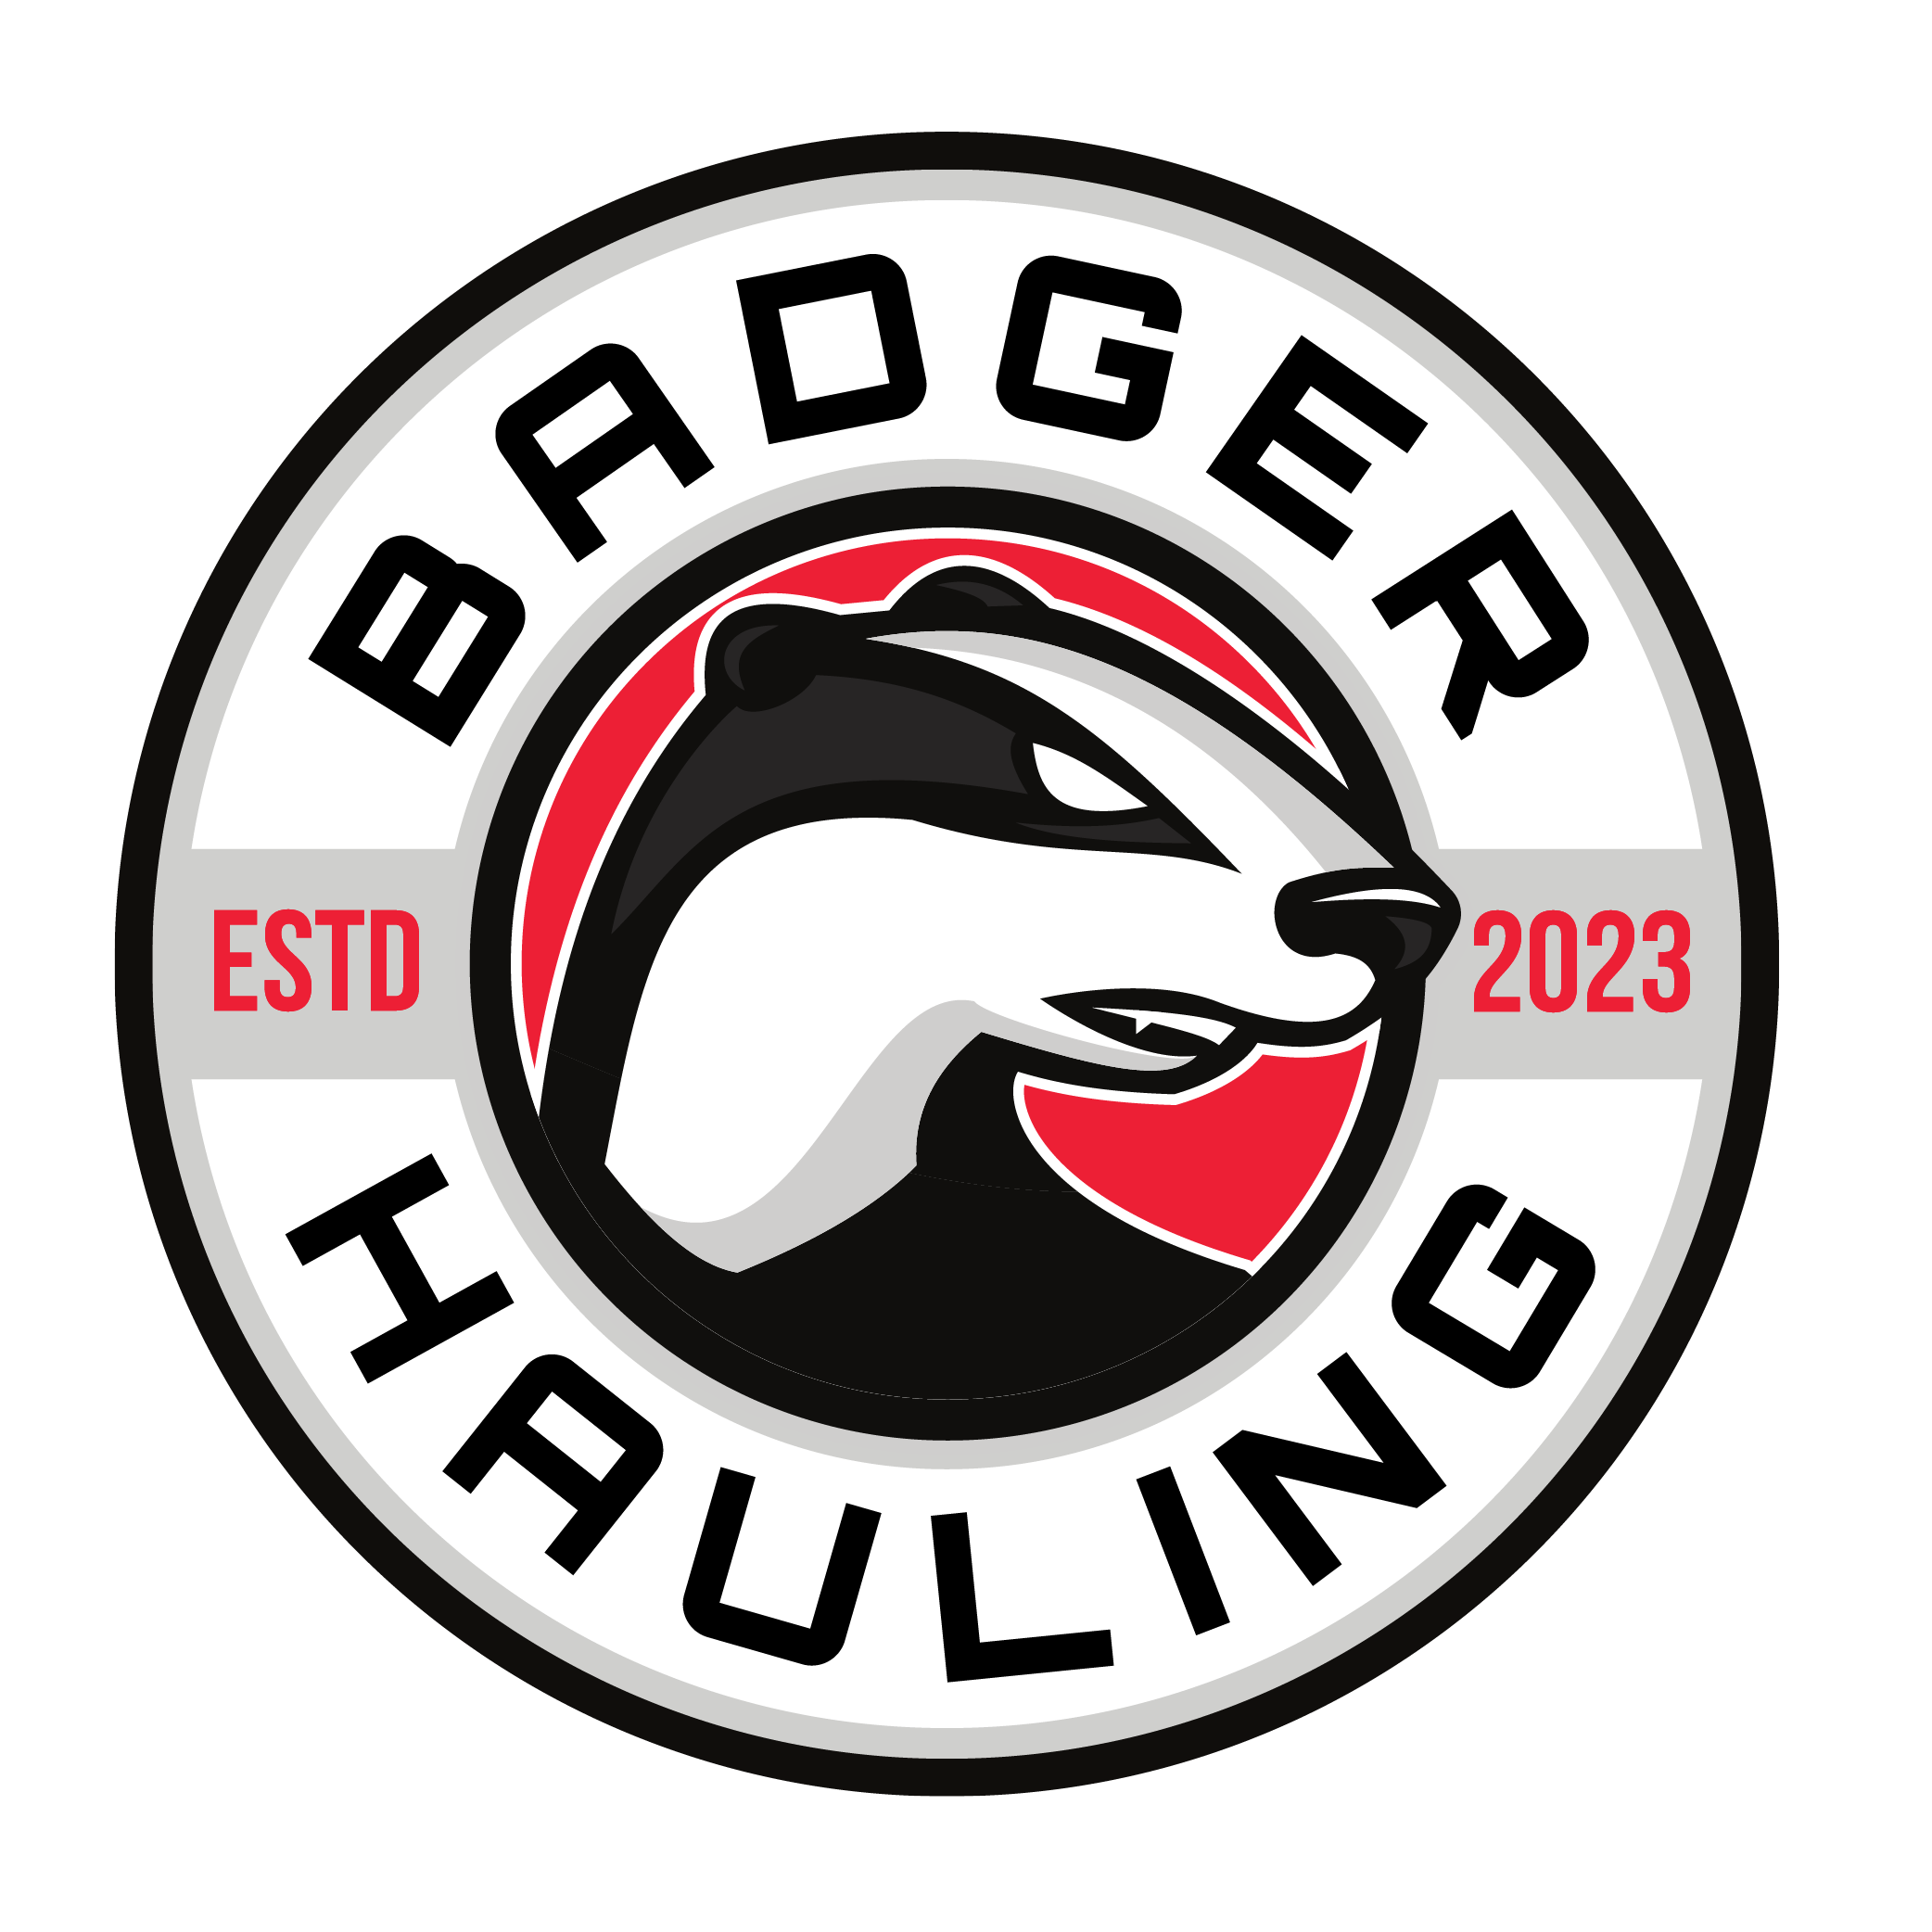 Badger Hauling Logo-01